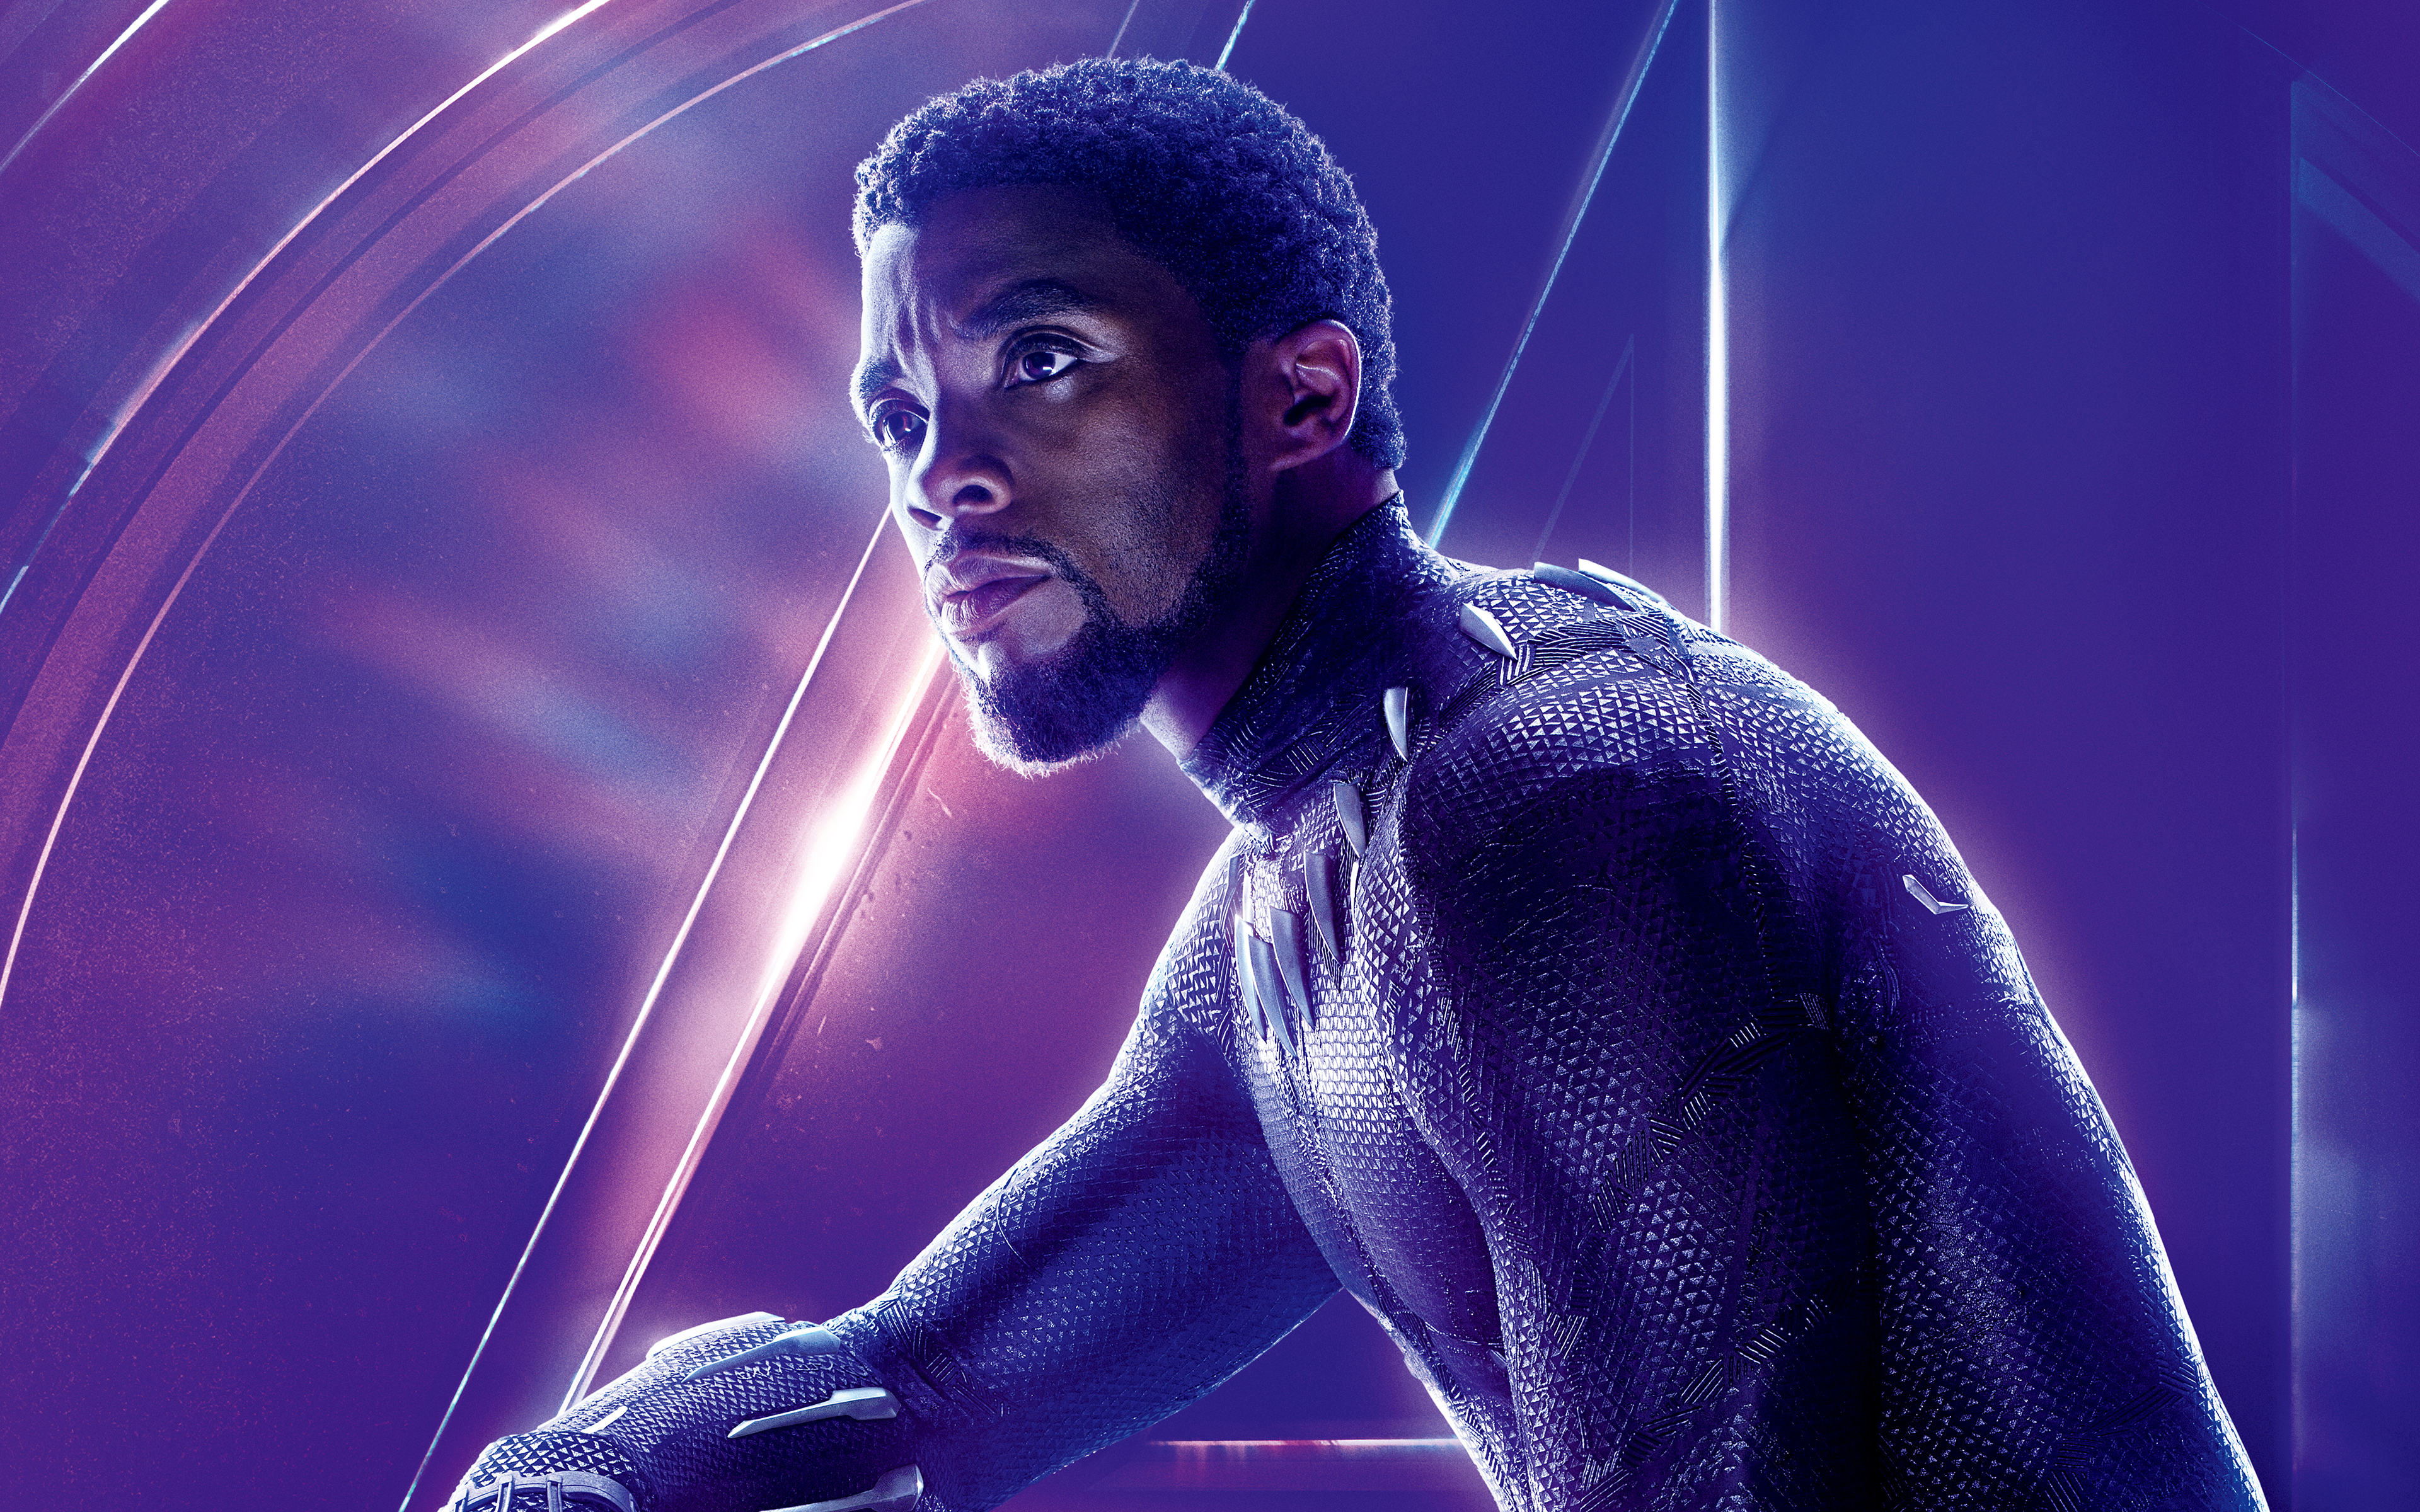 Avengers Infinity War Chadwick Boseman Black Panther 4K 8K Wallpapers